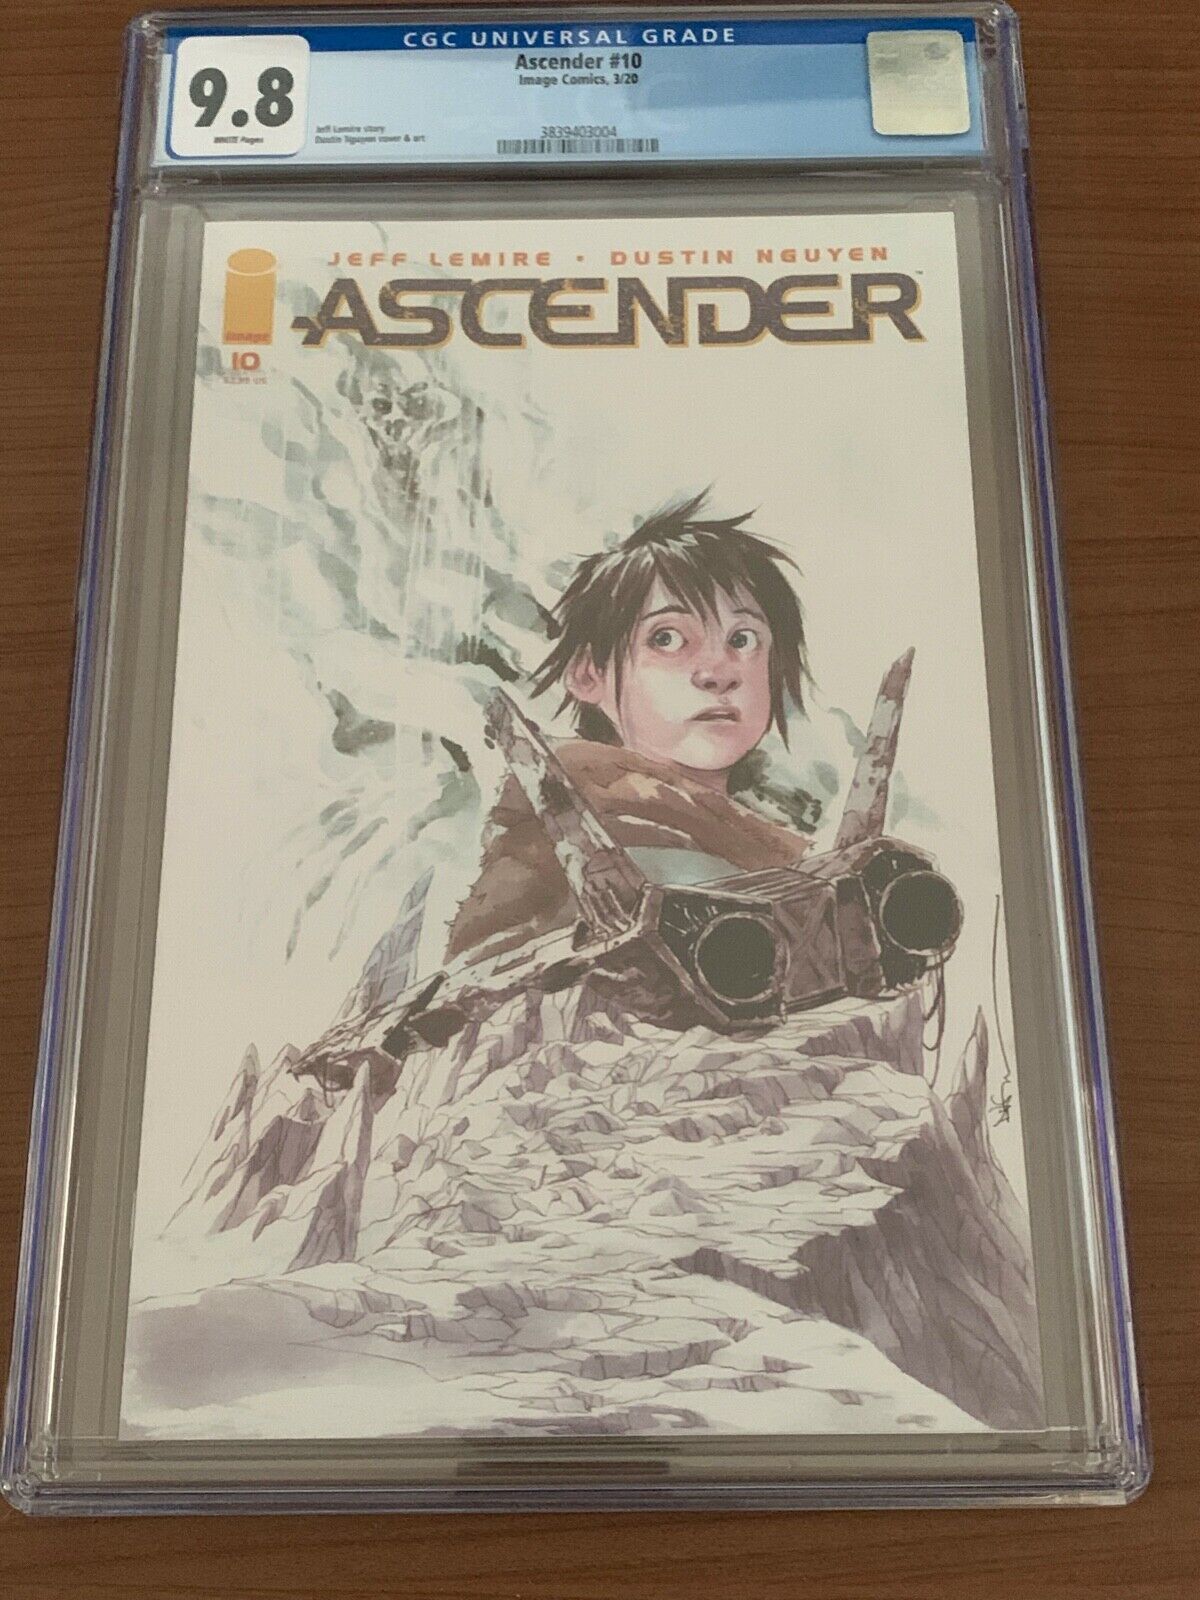 Ascender #10 CGC 9.8 Jeff Lemire Dustin Nguyen Image Comics NM 1st print